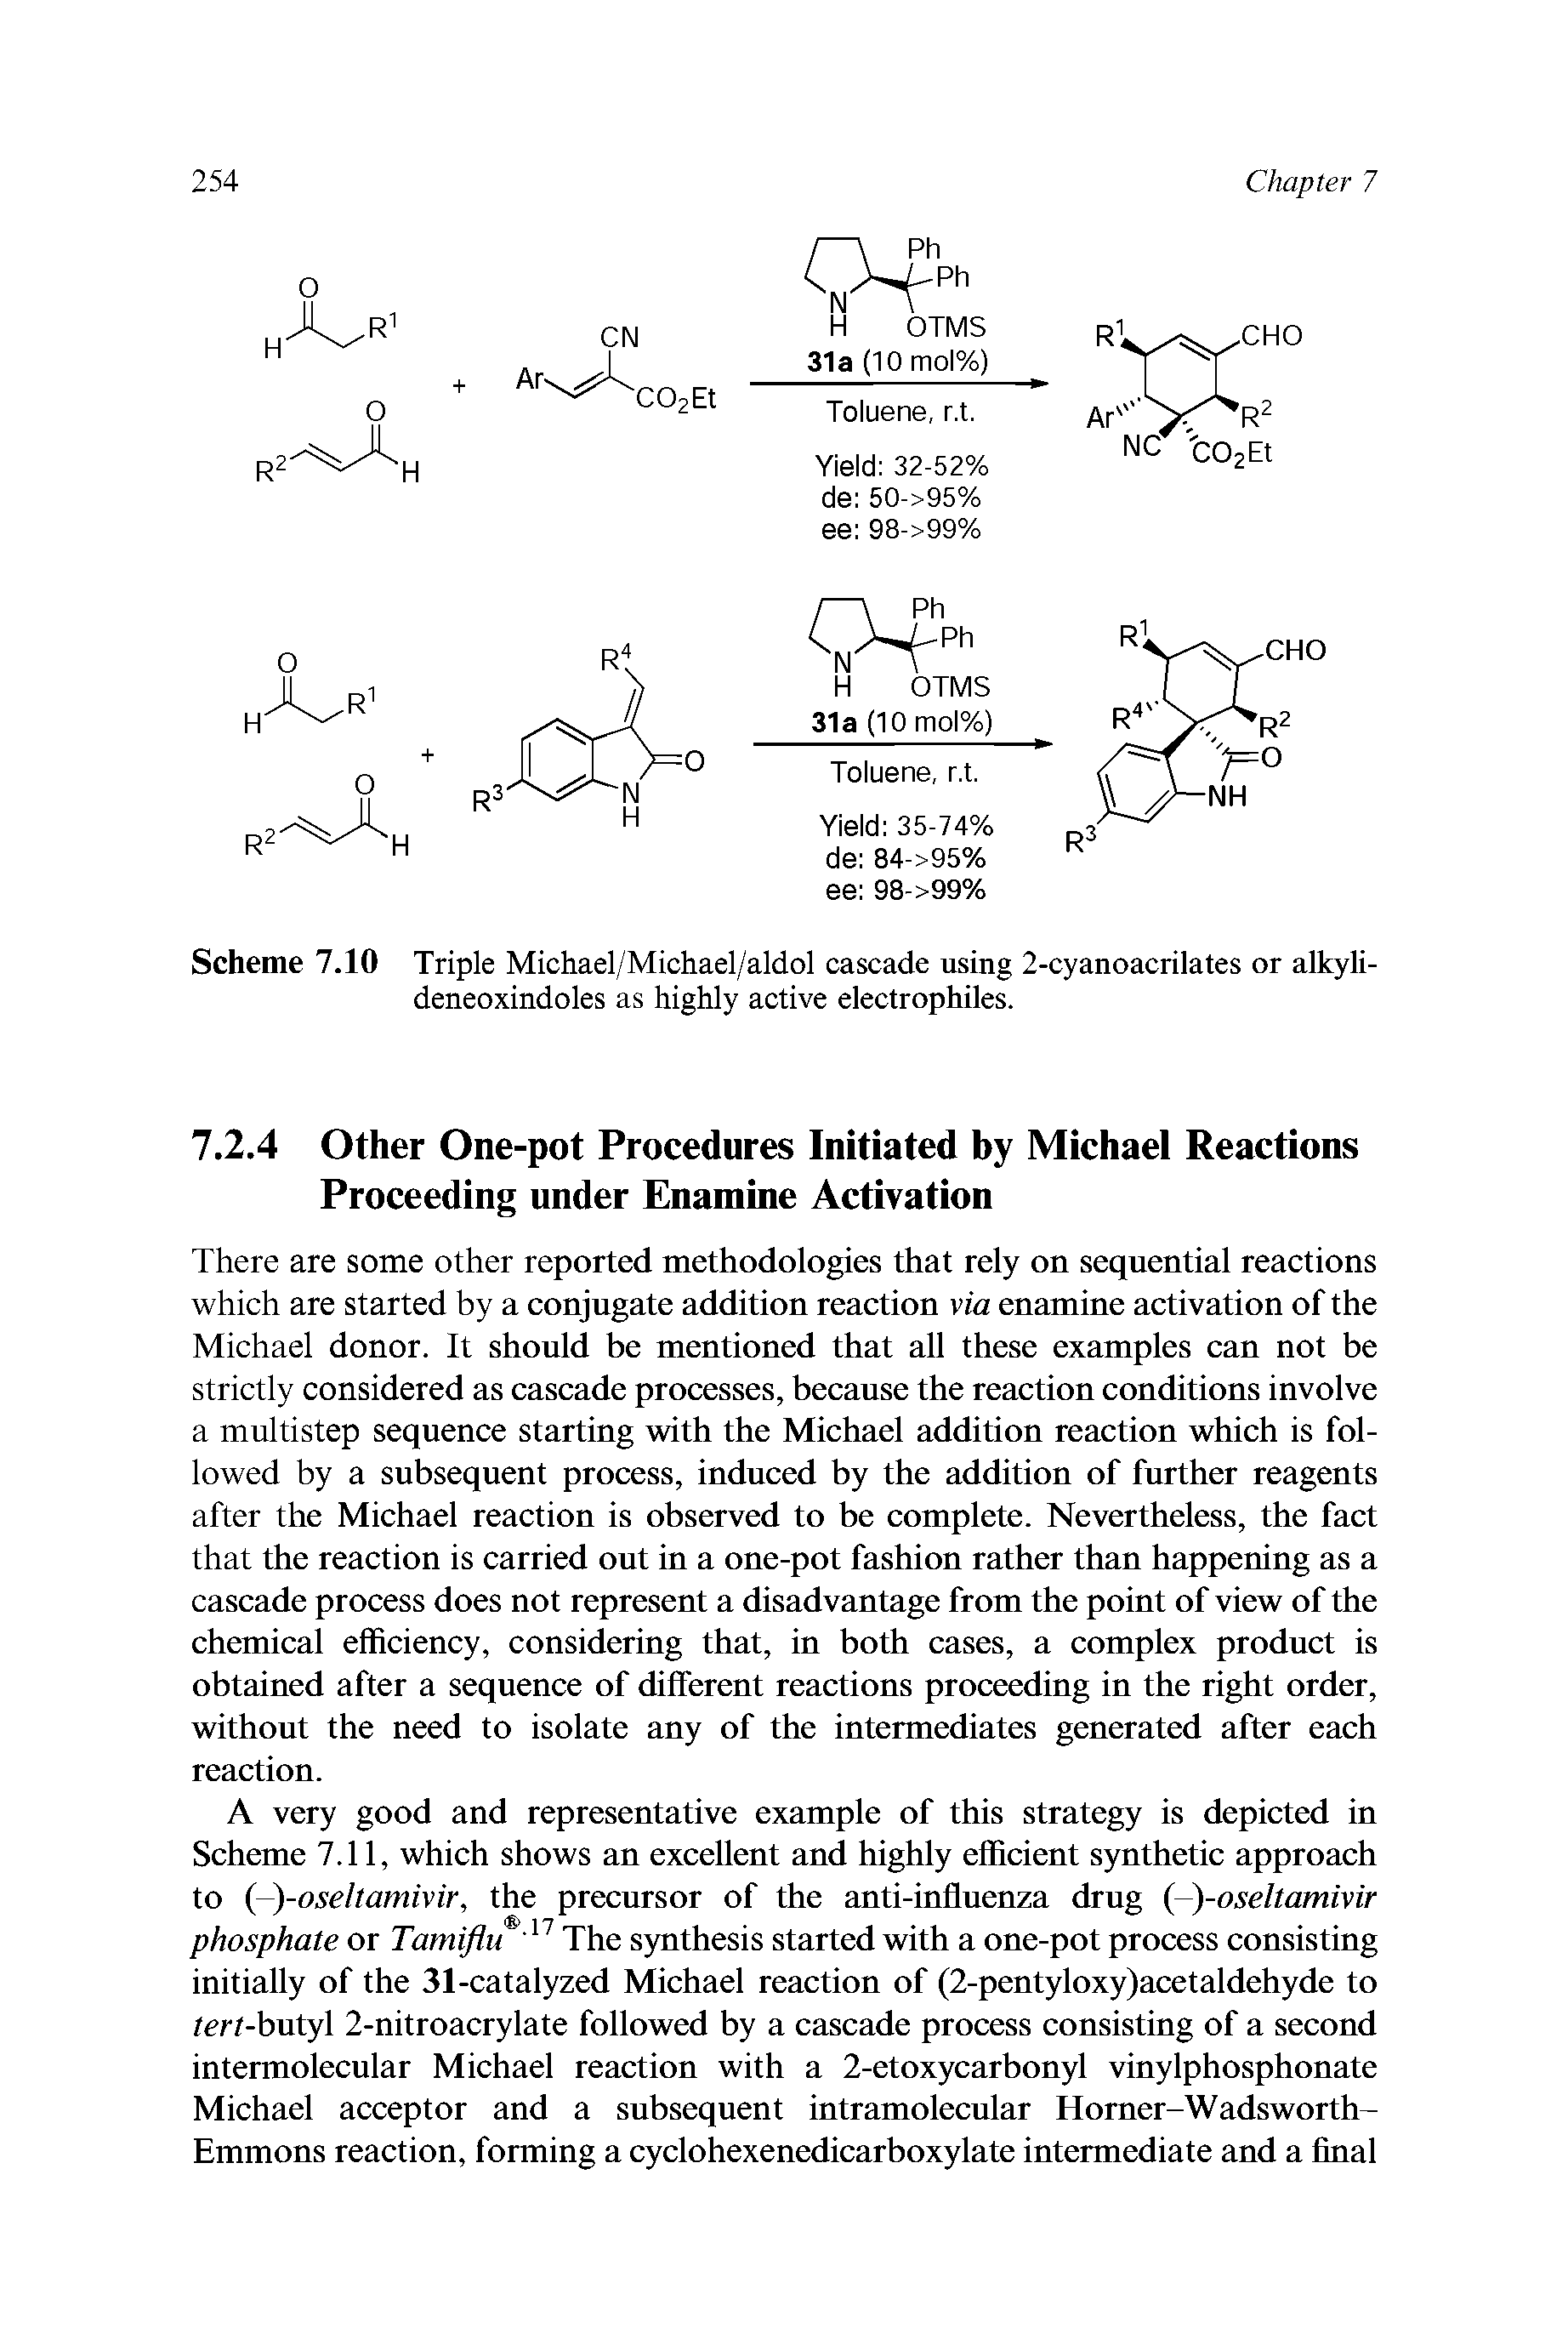 Scheme 7.10 Triple Michael/Michael/aldol cascade using 2-cyanoacrilates or alkyli-deneoxindoles as highly active electrophiles.